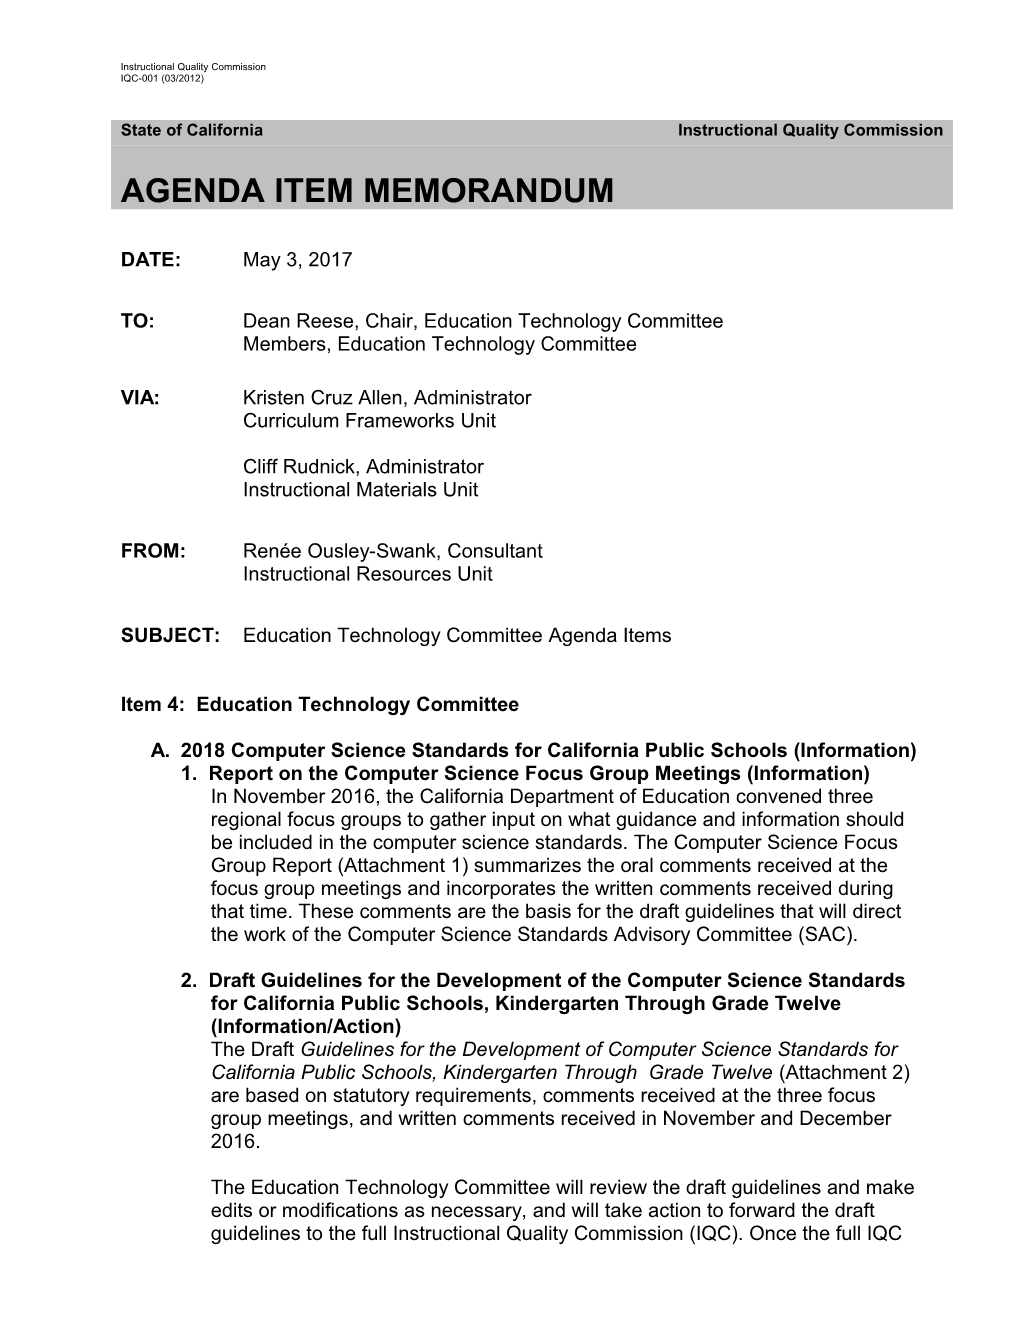 Ed Tech Agenda Memo - Instructional Quality Commission (CA Dept of Education)